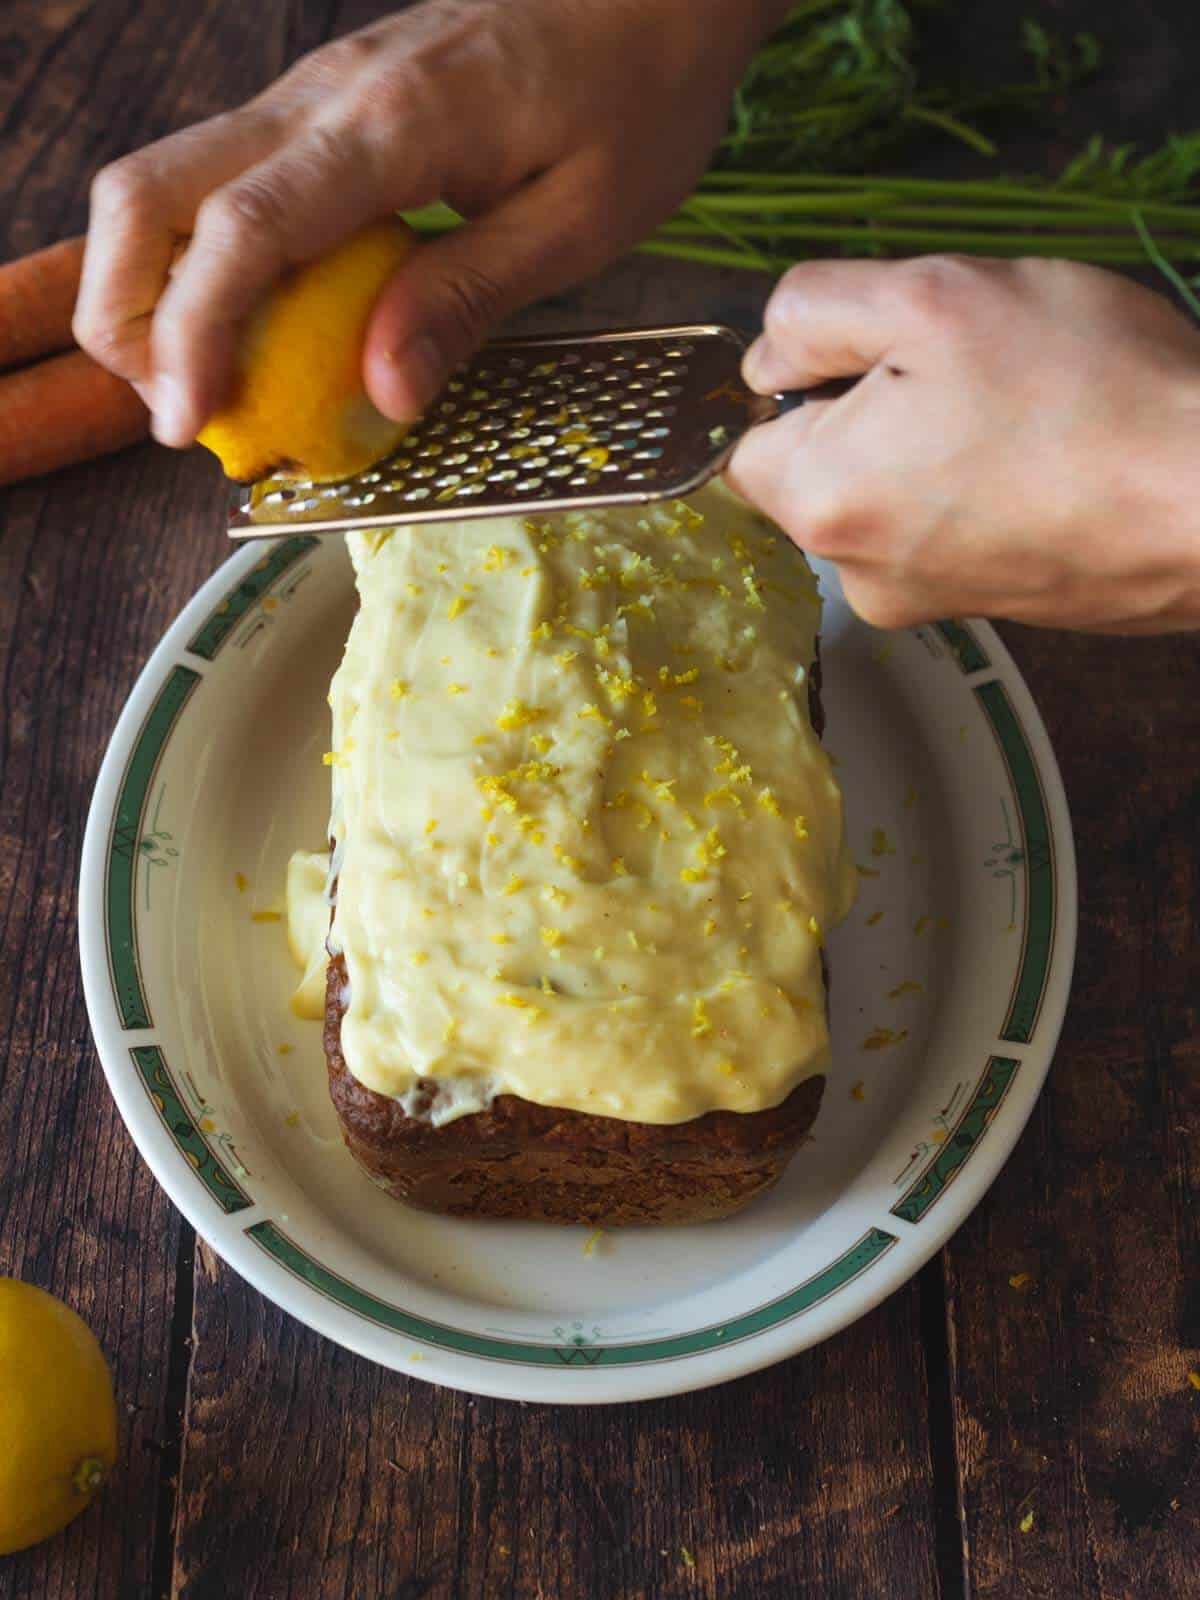 rayando cáscara de limón sobre el glaseado.